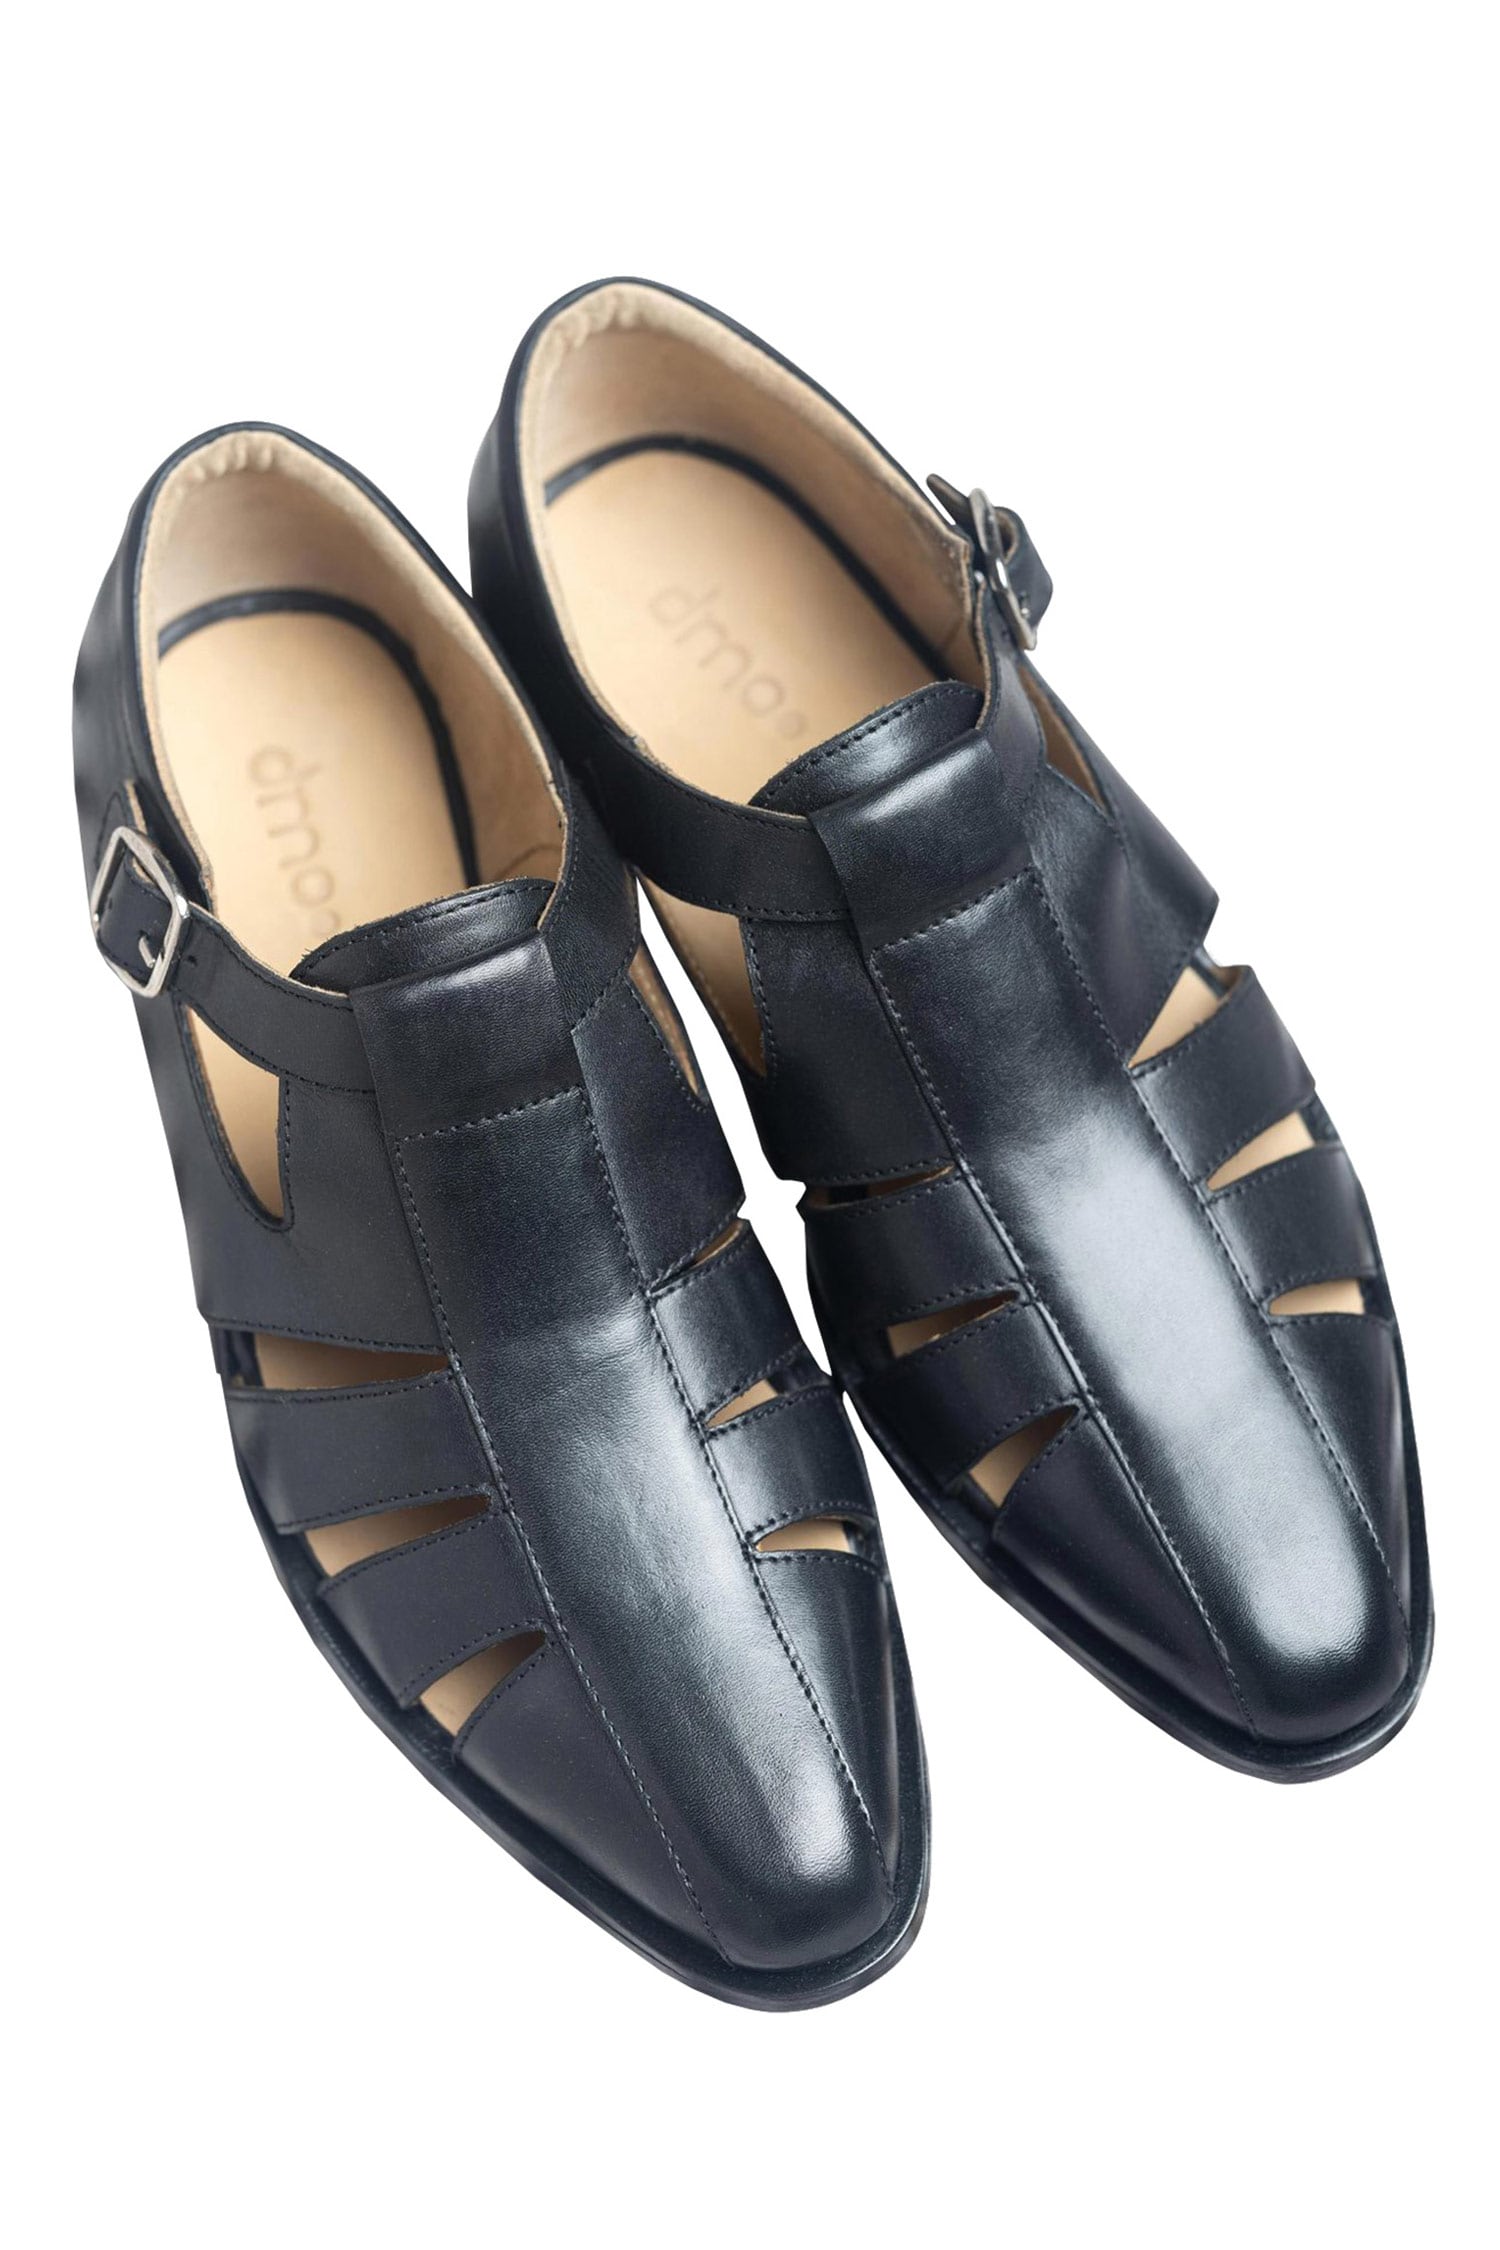 Buy Black Peshawari Sandals For Men by Dmodot Online at Aza Fashions.